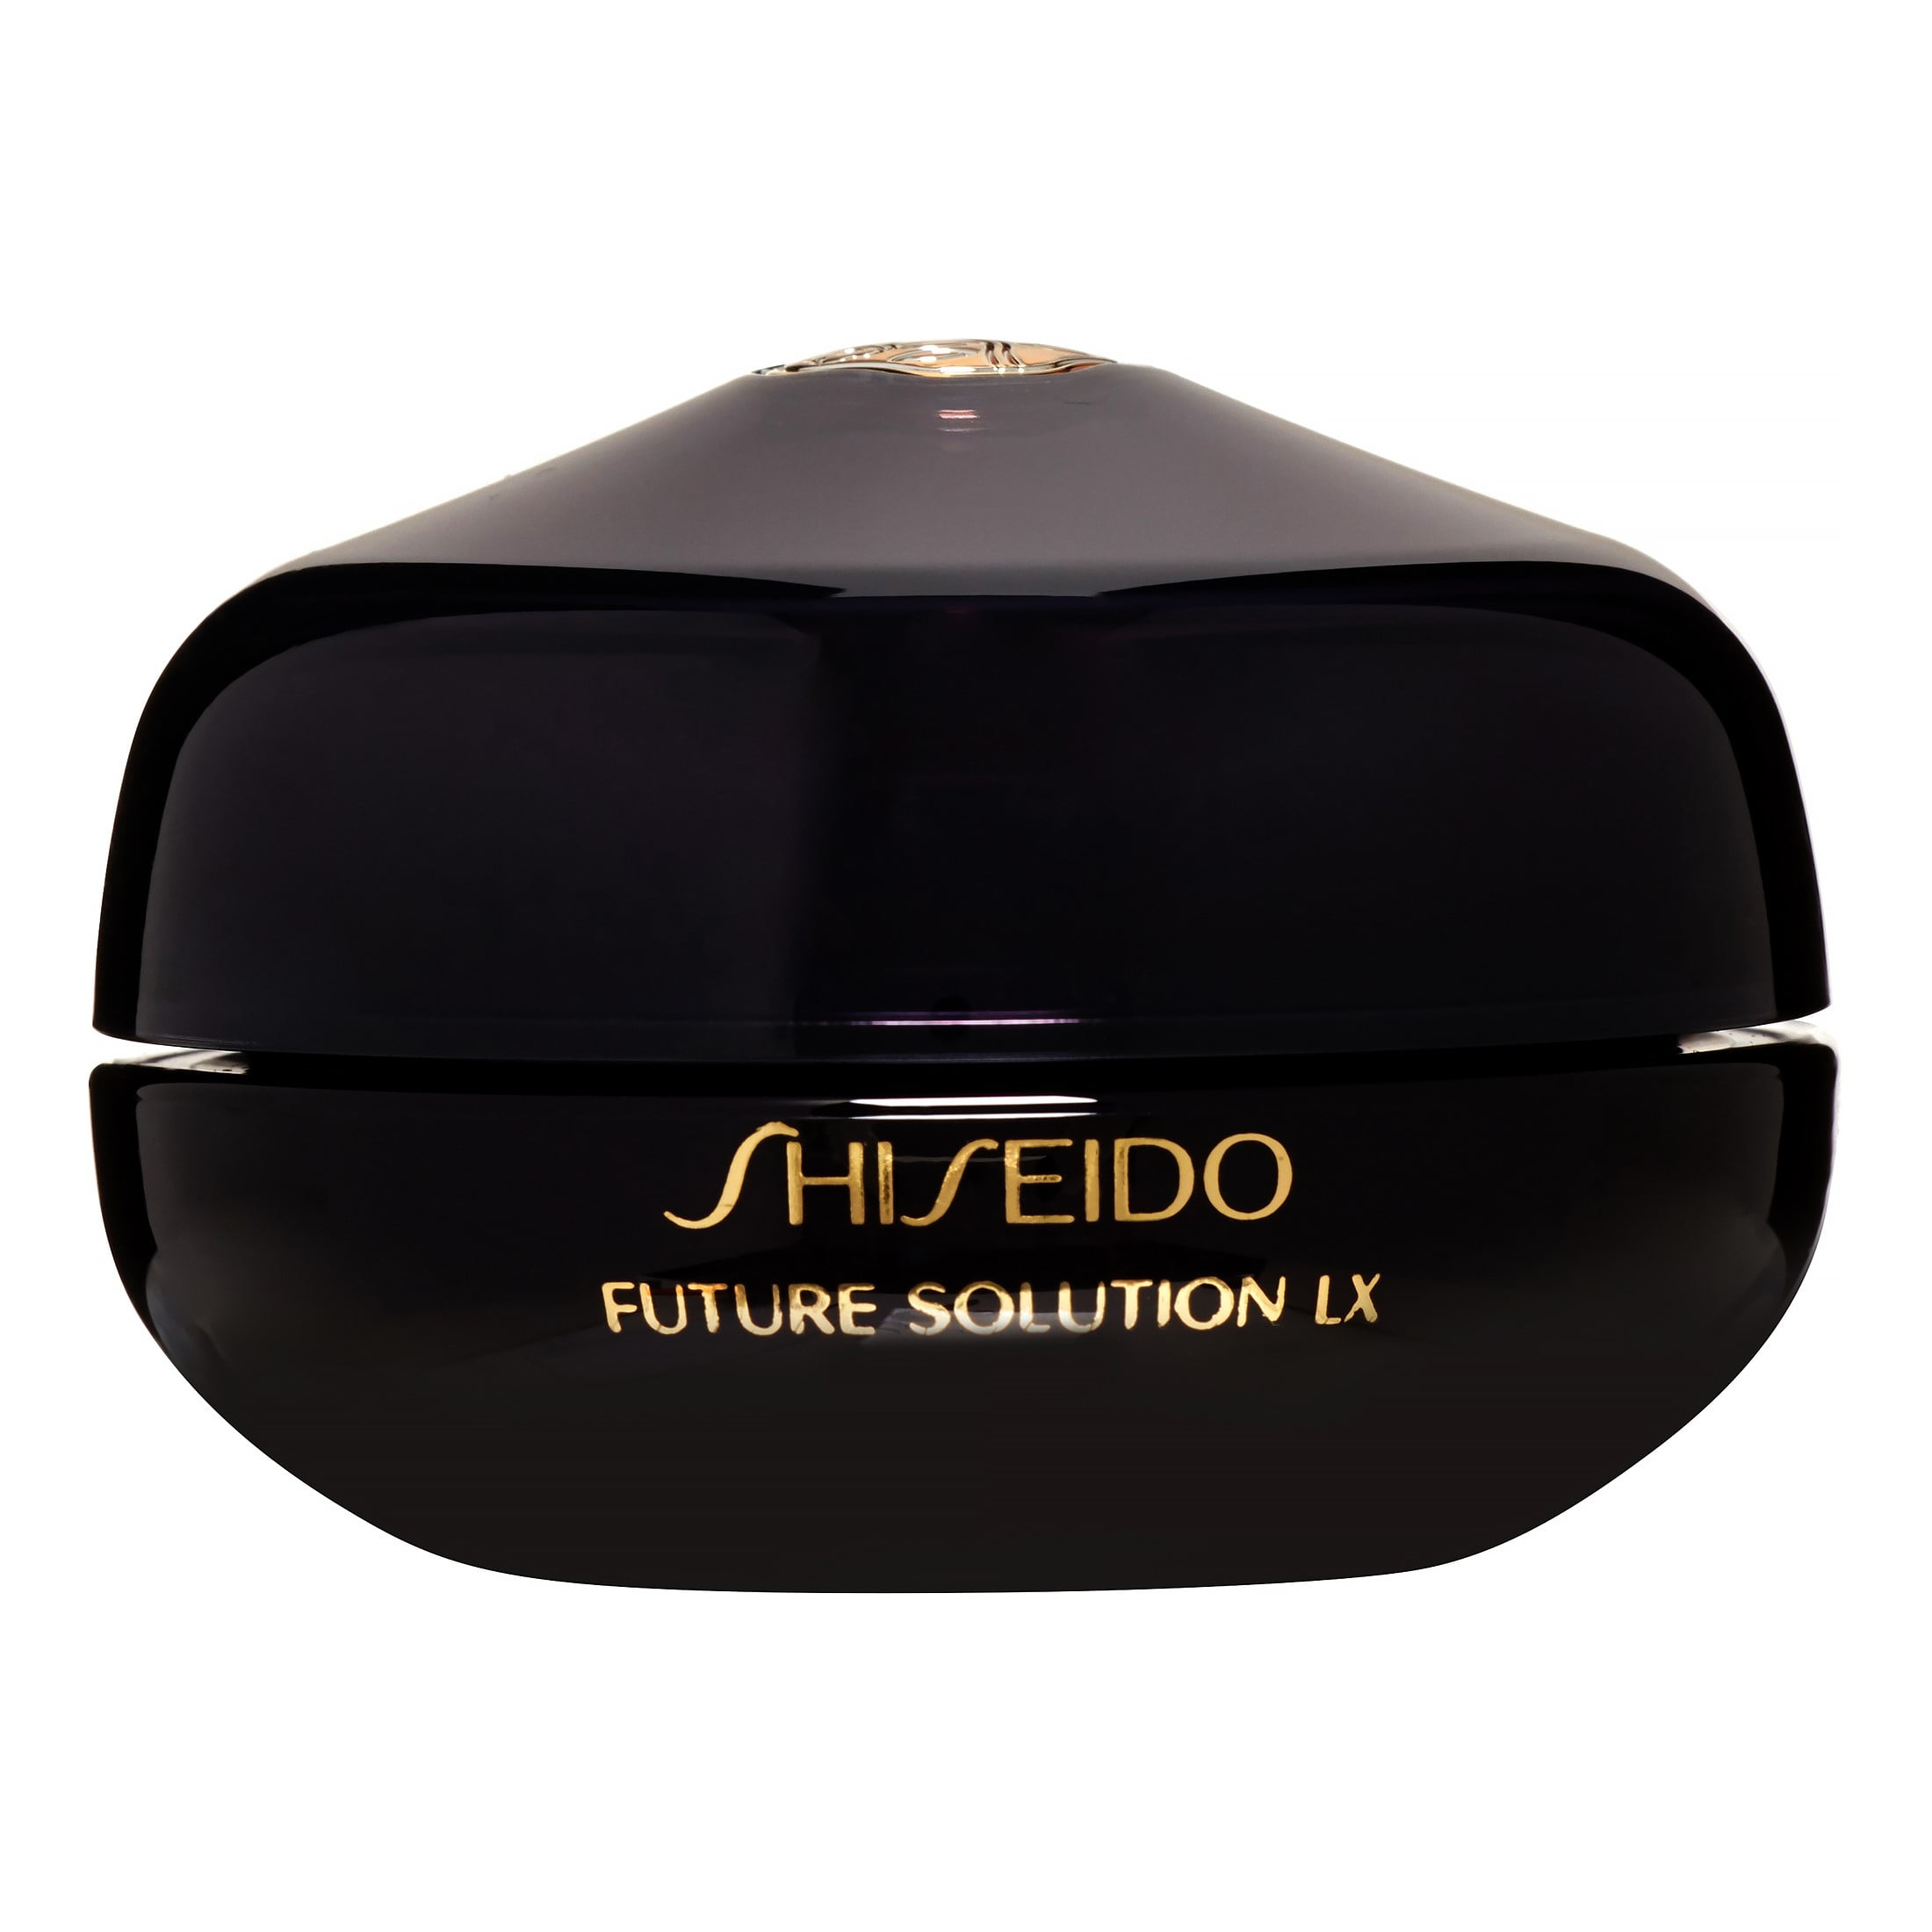 Shiseido Future solution. Shiseido Future solution LX Eye and Lip Contour Regenerating Cream e. Future solution LX. Shiseido Future solution LX ночной крем чье производство. Shiseido lx